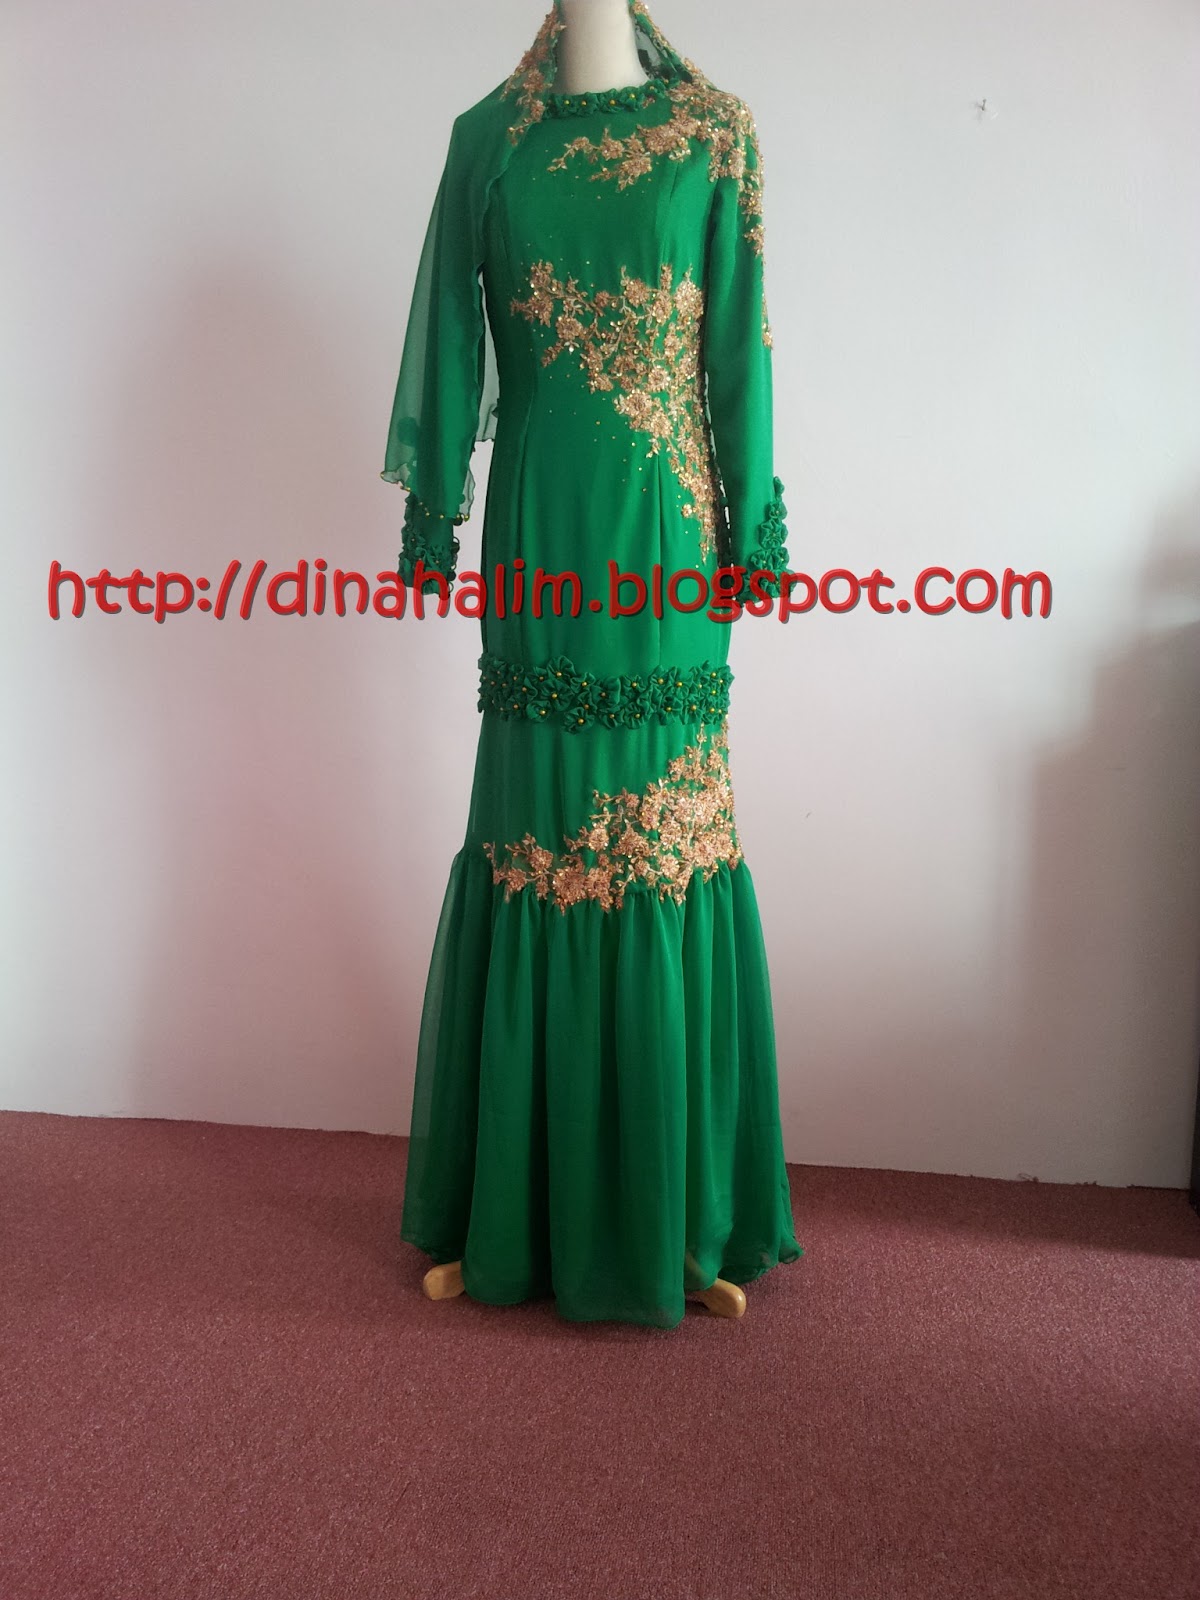 Dina Halim Bridal Boutique Baju  Baru Green Emerald 